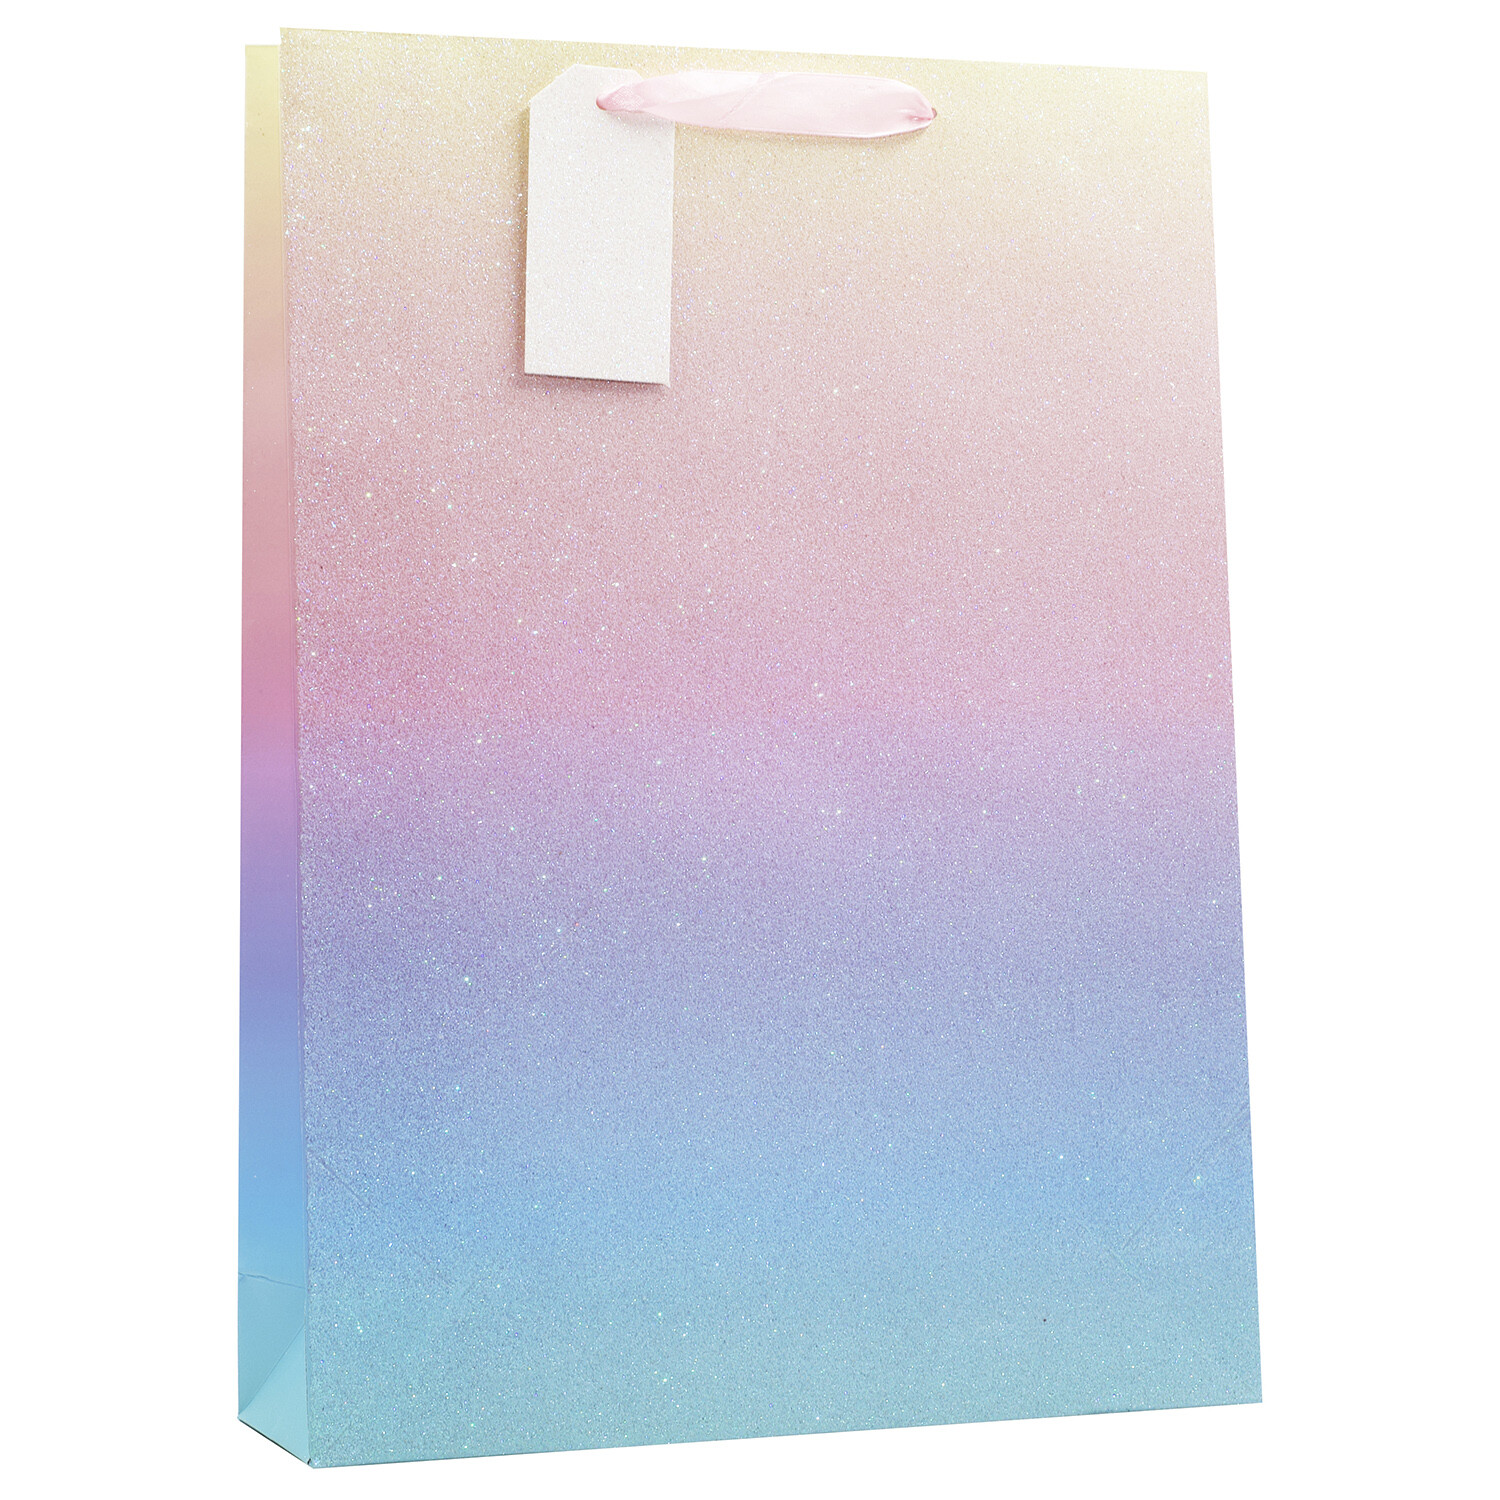 Rainbow Glitter Bag - XL Image